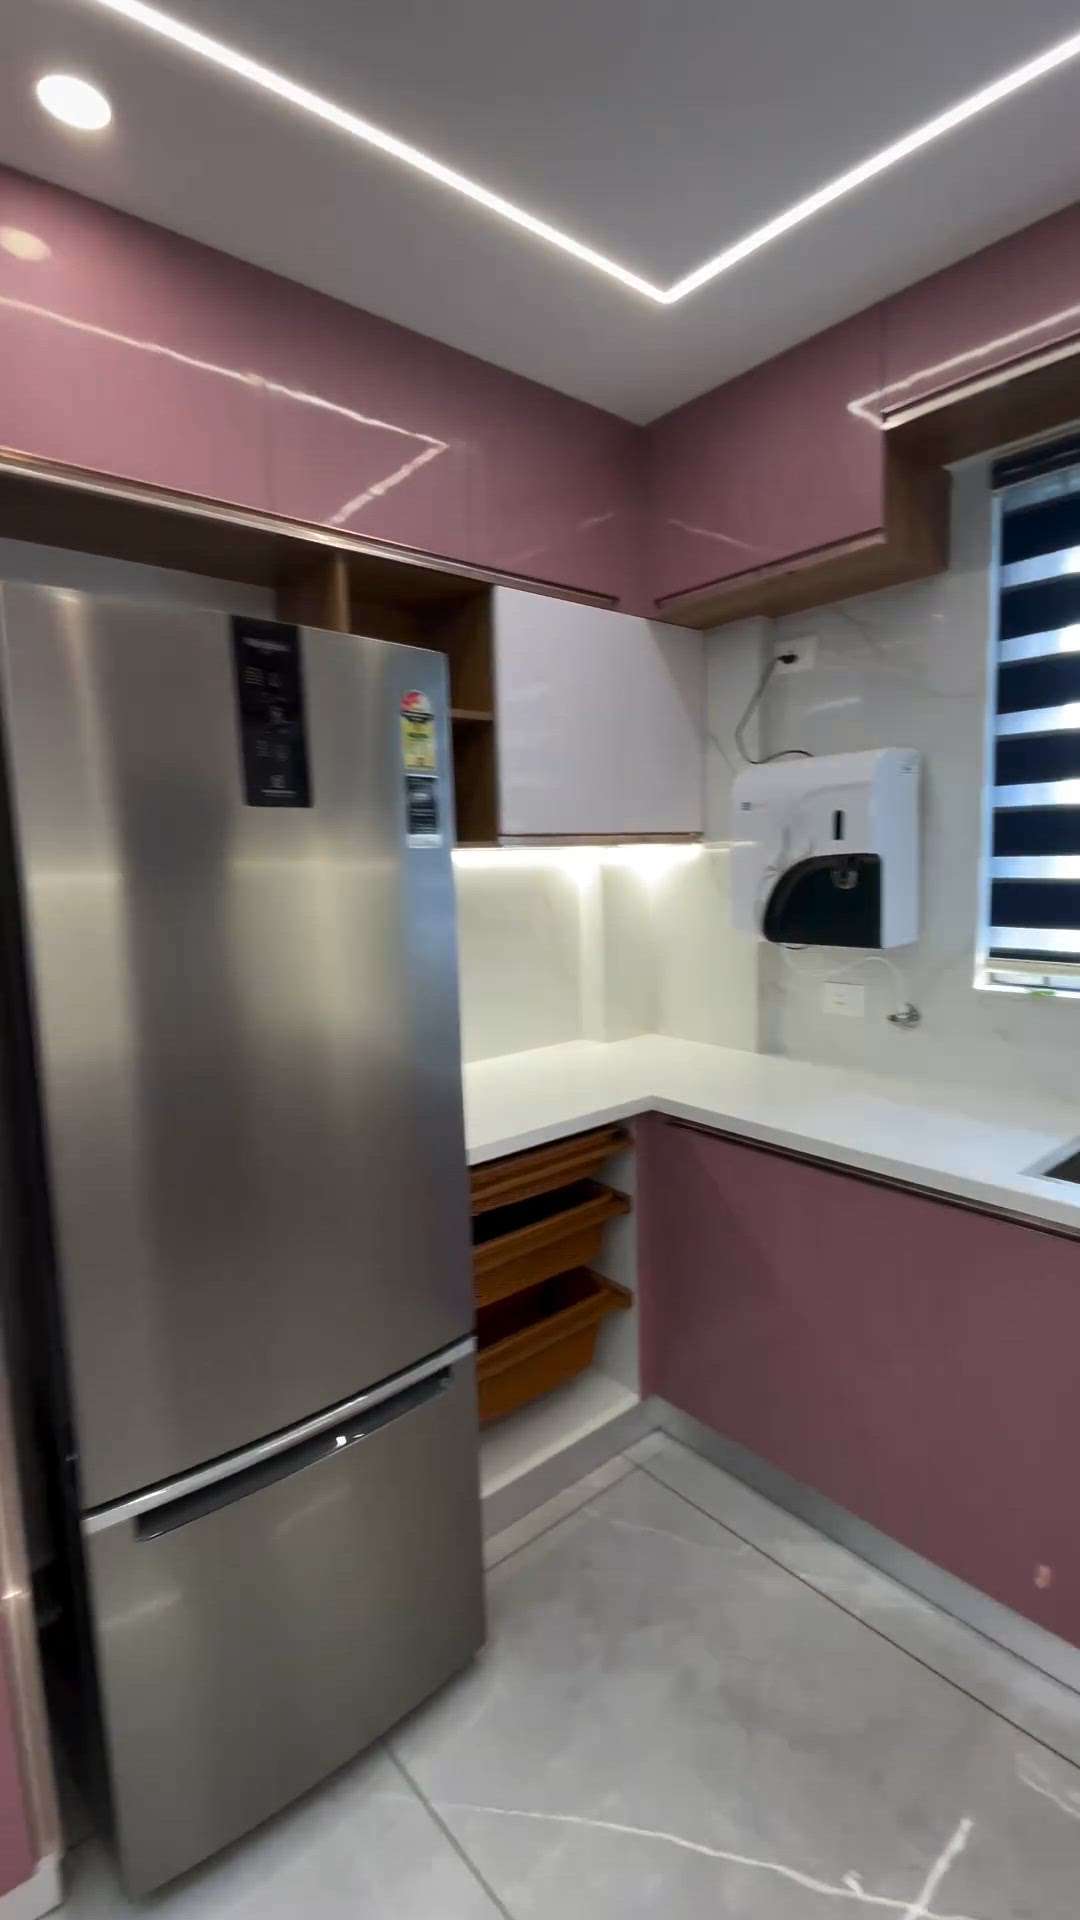 banvaye apna modular kitchen
#ModularKitchen 
 #mordenkitchen 
 #viral 
 #trendingdesign 
 #KitchenIdeas 
 #OpenKitchnen